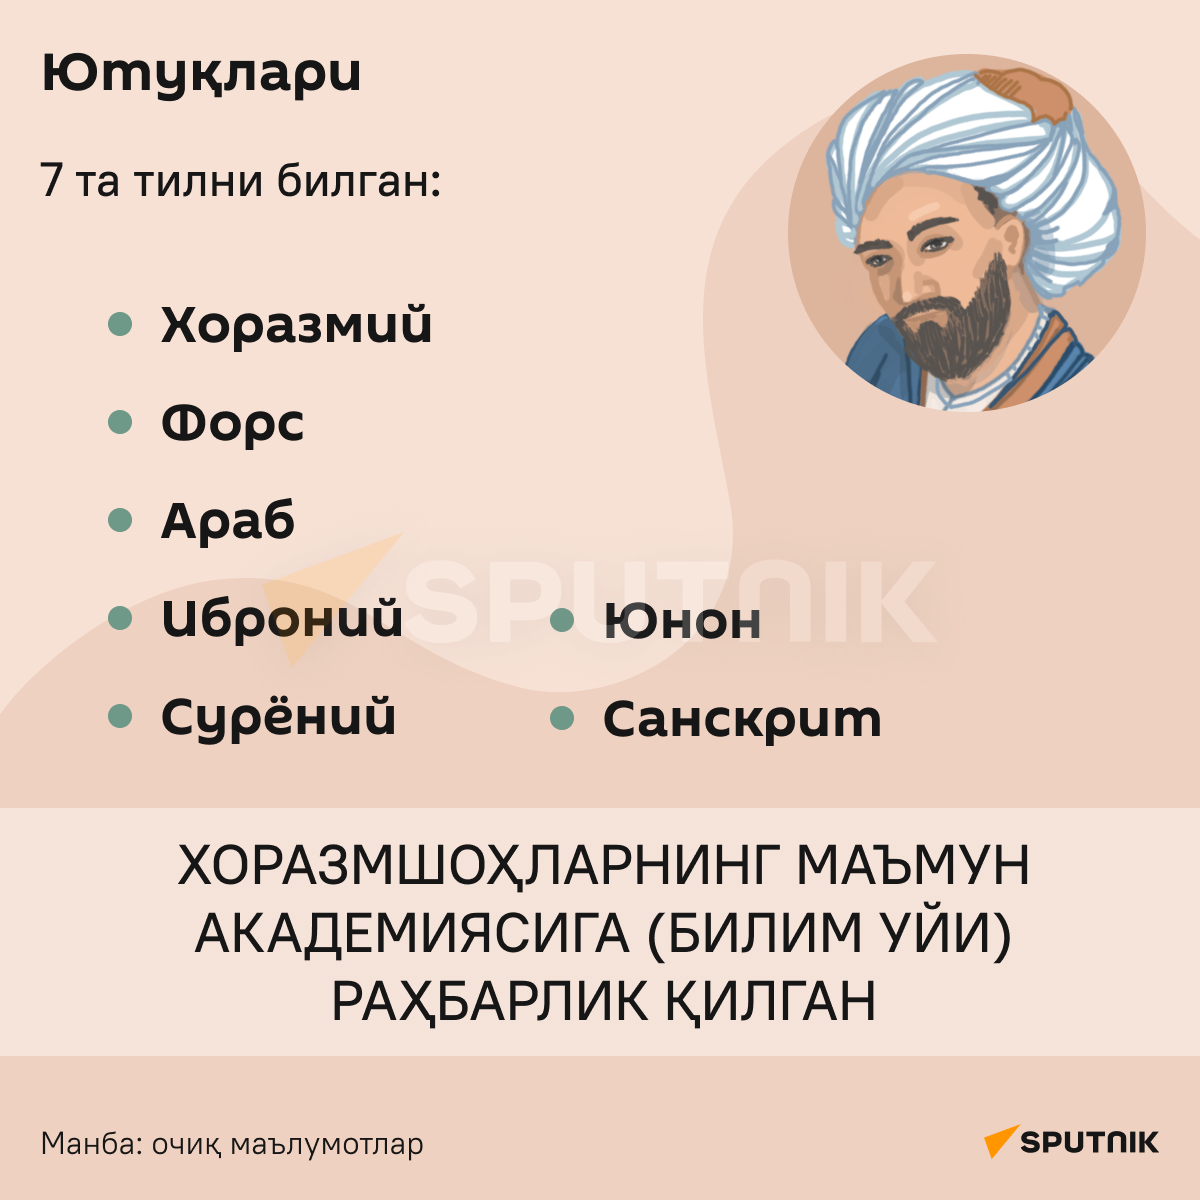 Абу Райхон Беруний инфографика - Sputnik Ўзбекистон